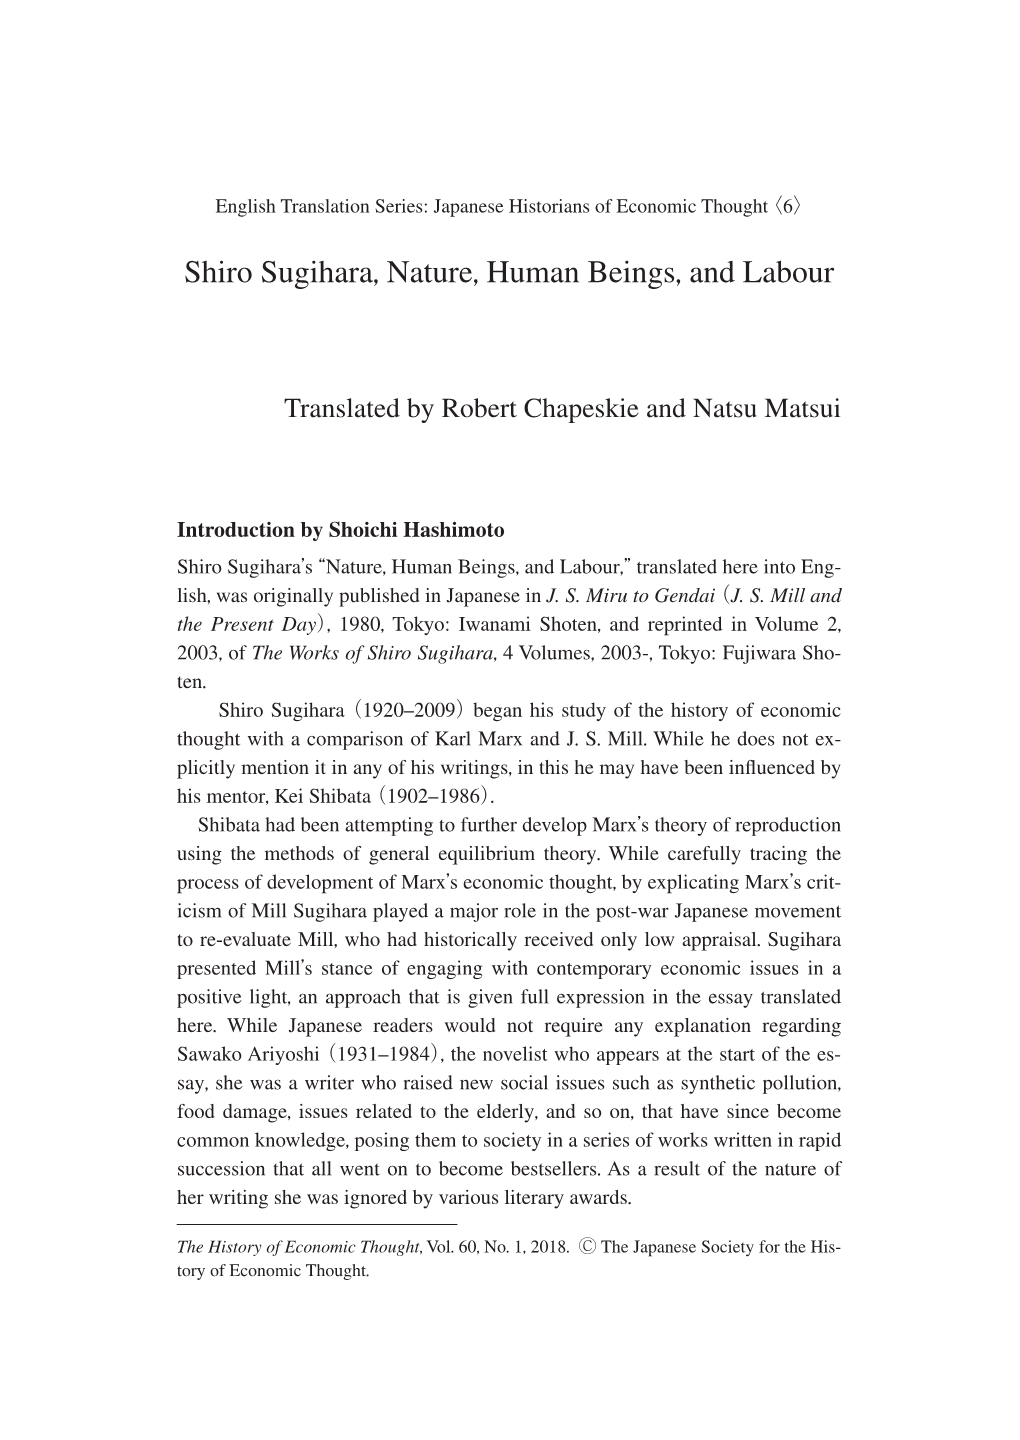 Shiro Sugihara, Nature, Human Beings, and Labour